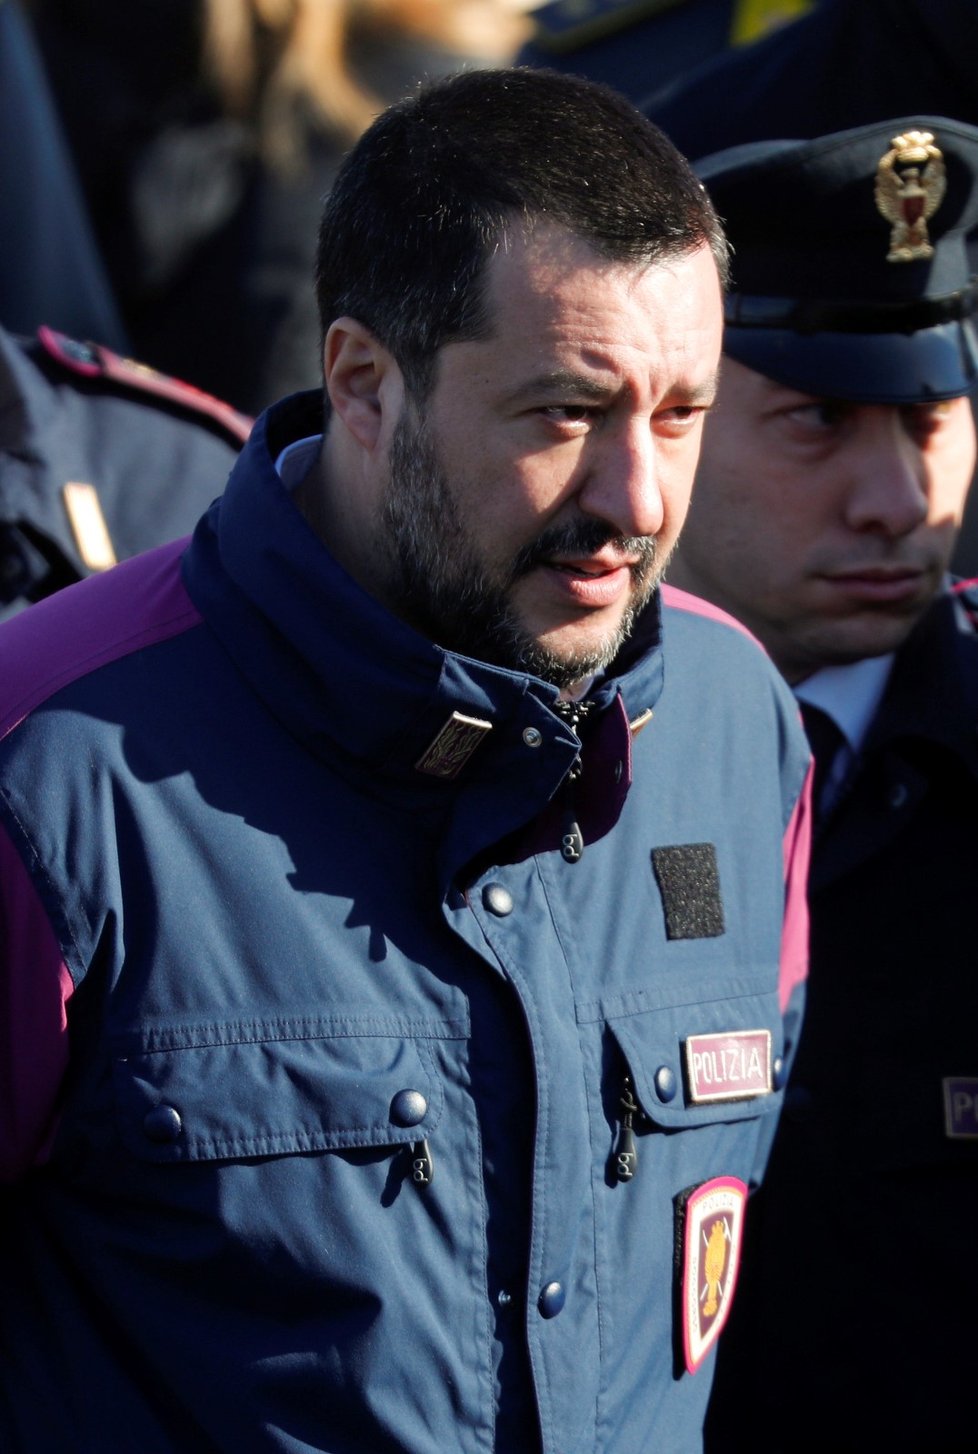 Italský ministr vnitra Salvini si potrpí na nošení uniforem.